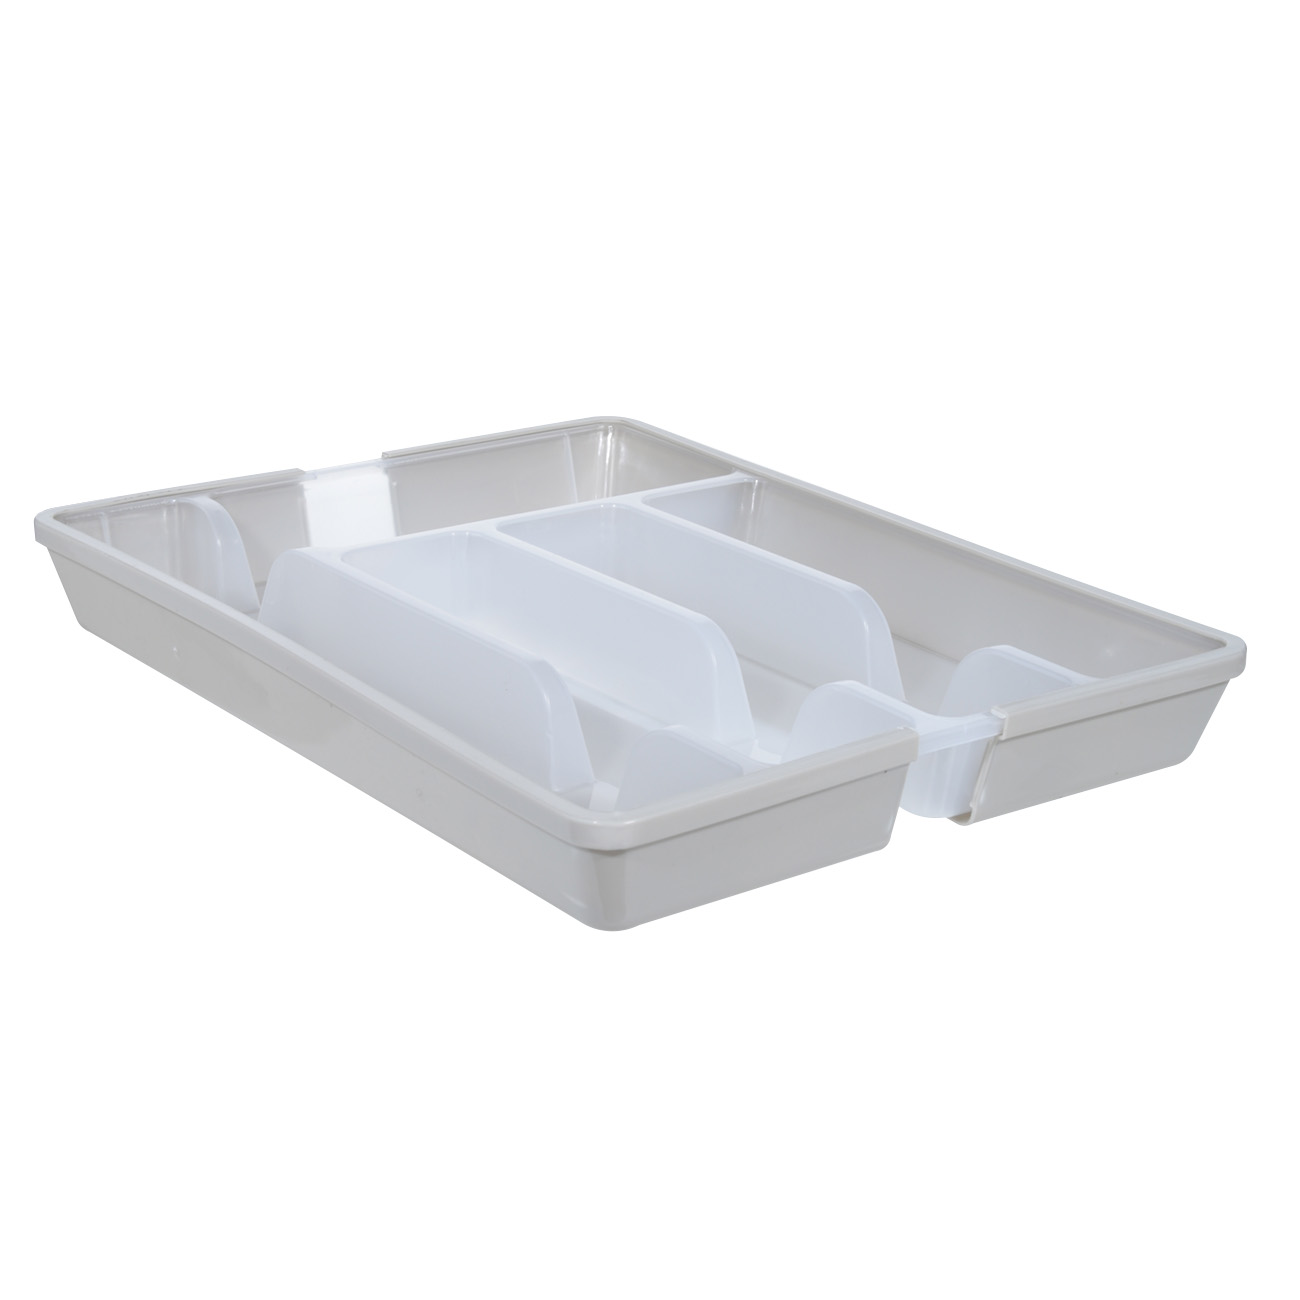 Cutlery tray, 37x27 cm, 7 units, sliding, plastic, white-gray, Keeping изображение № 3